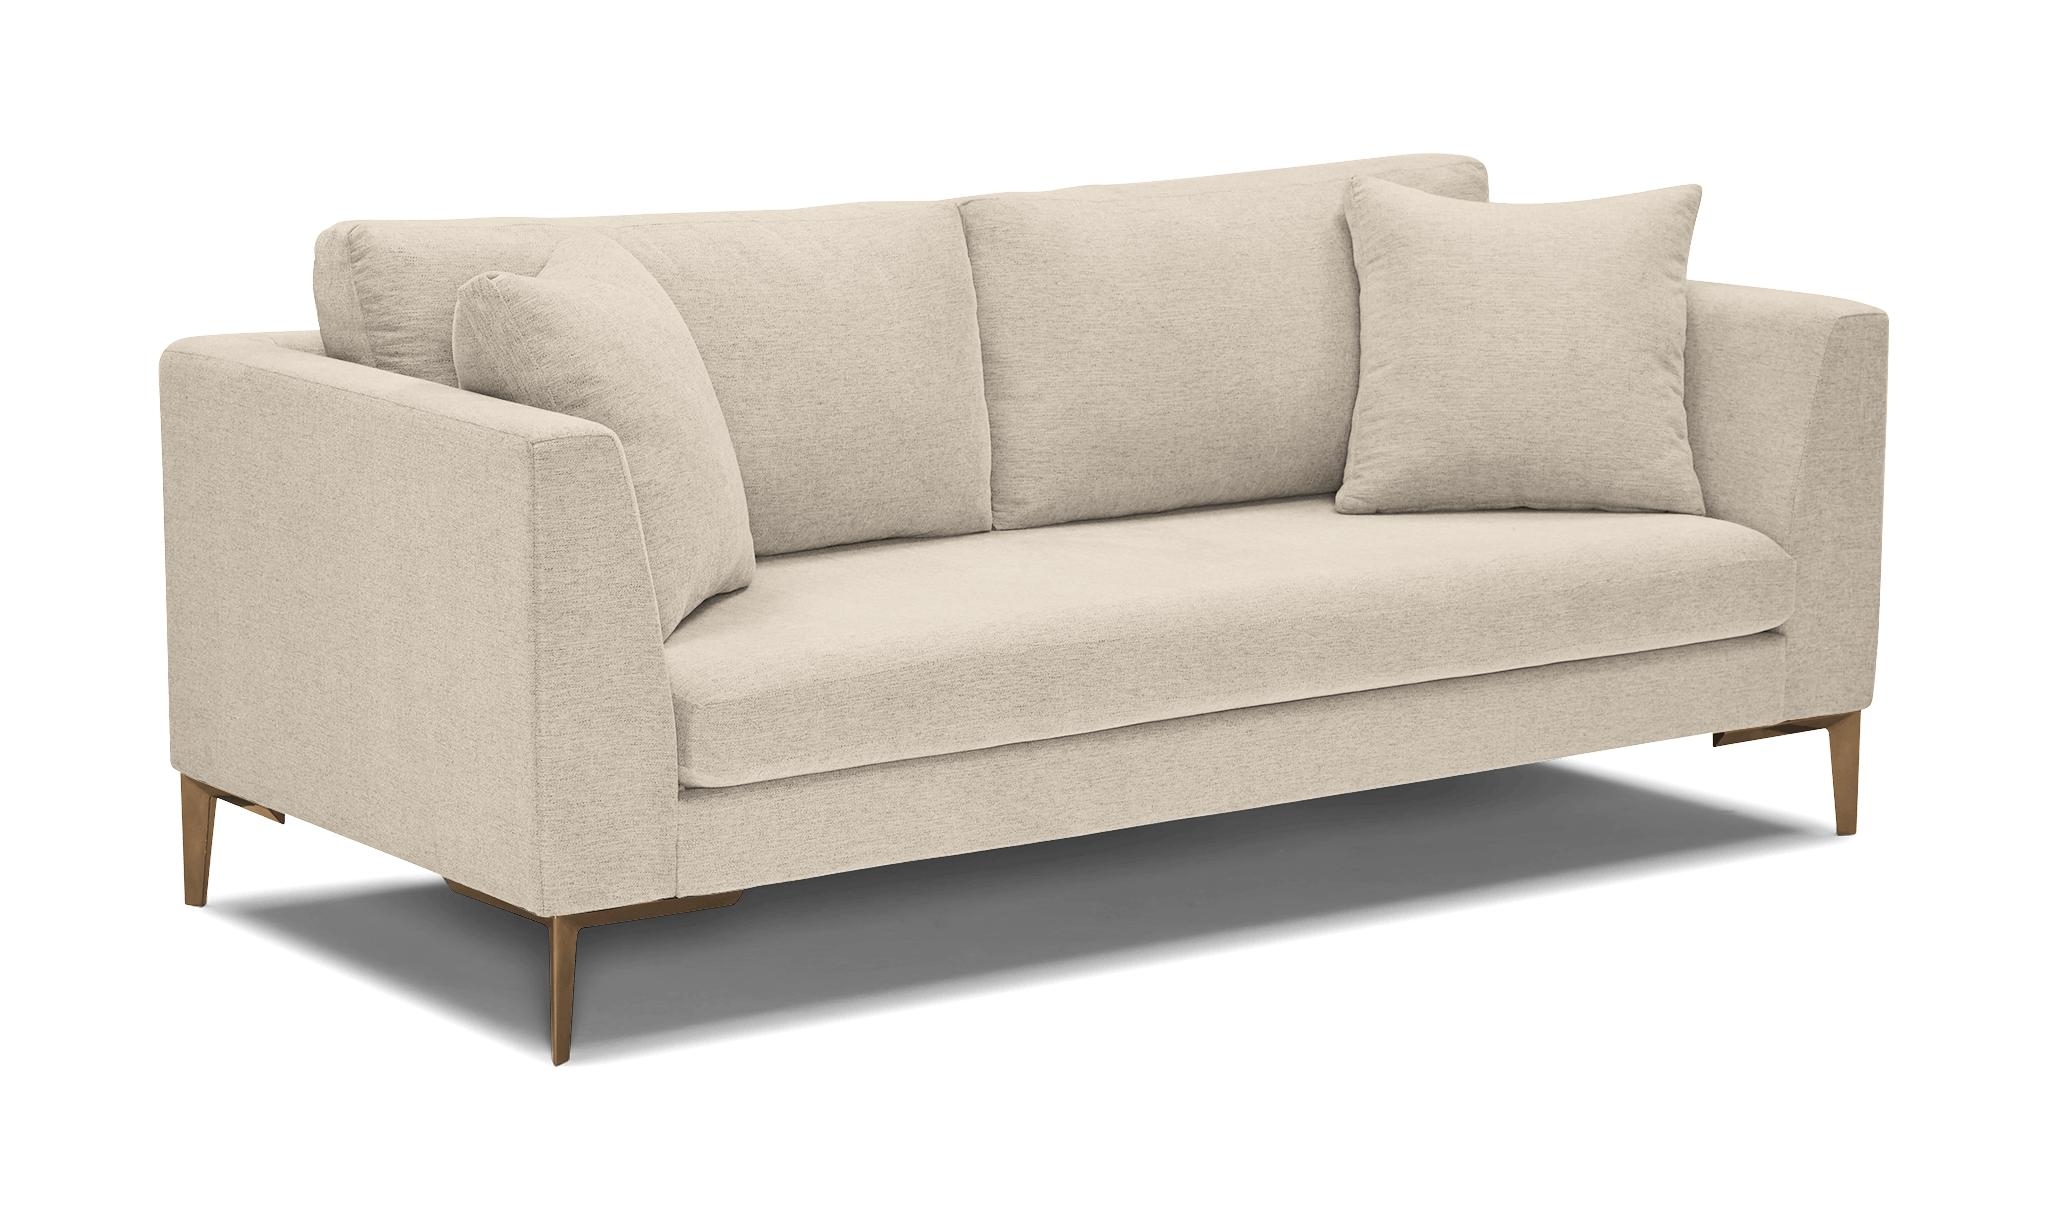 Beige/White Ainsley Mid Century Modern Sofa - Cody Sandstone - Image 1